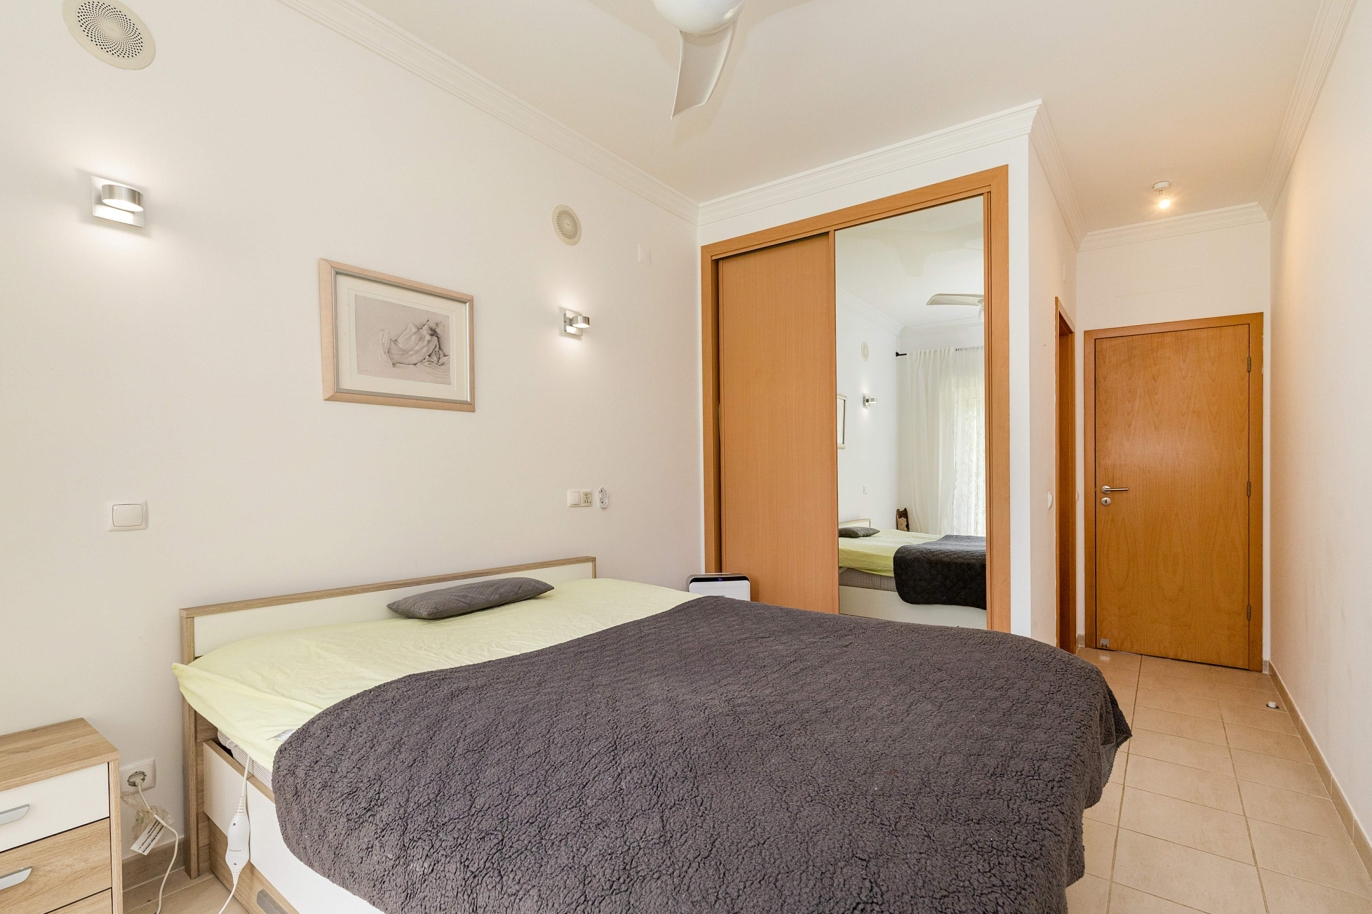 Apartamento T2, em condominio, para venda, Albufeira, Algarve_201454